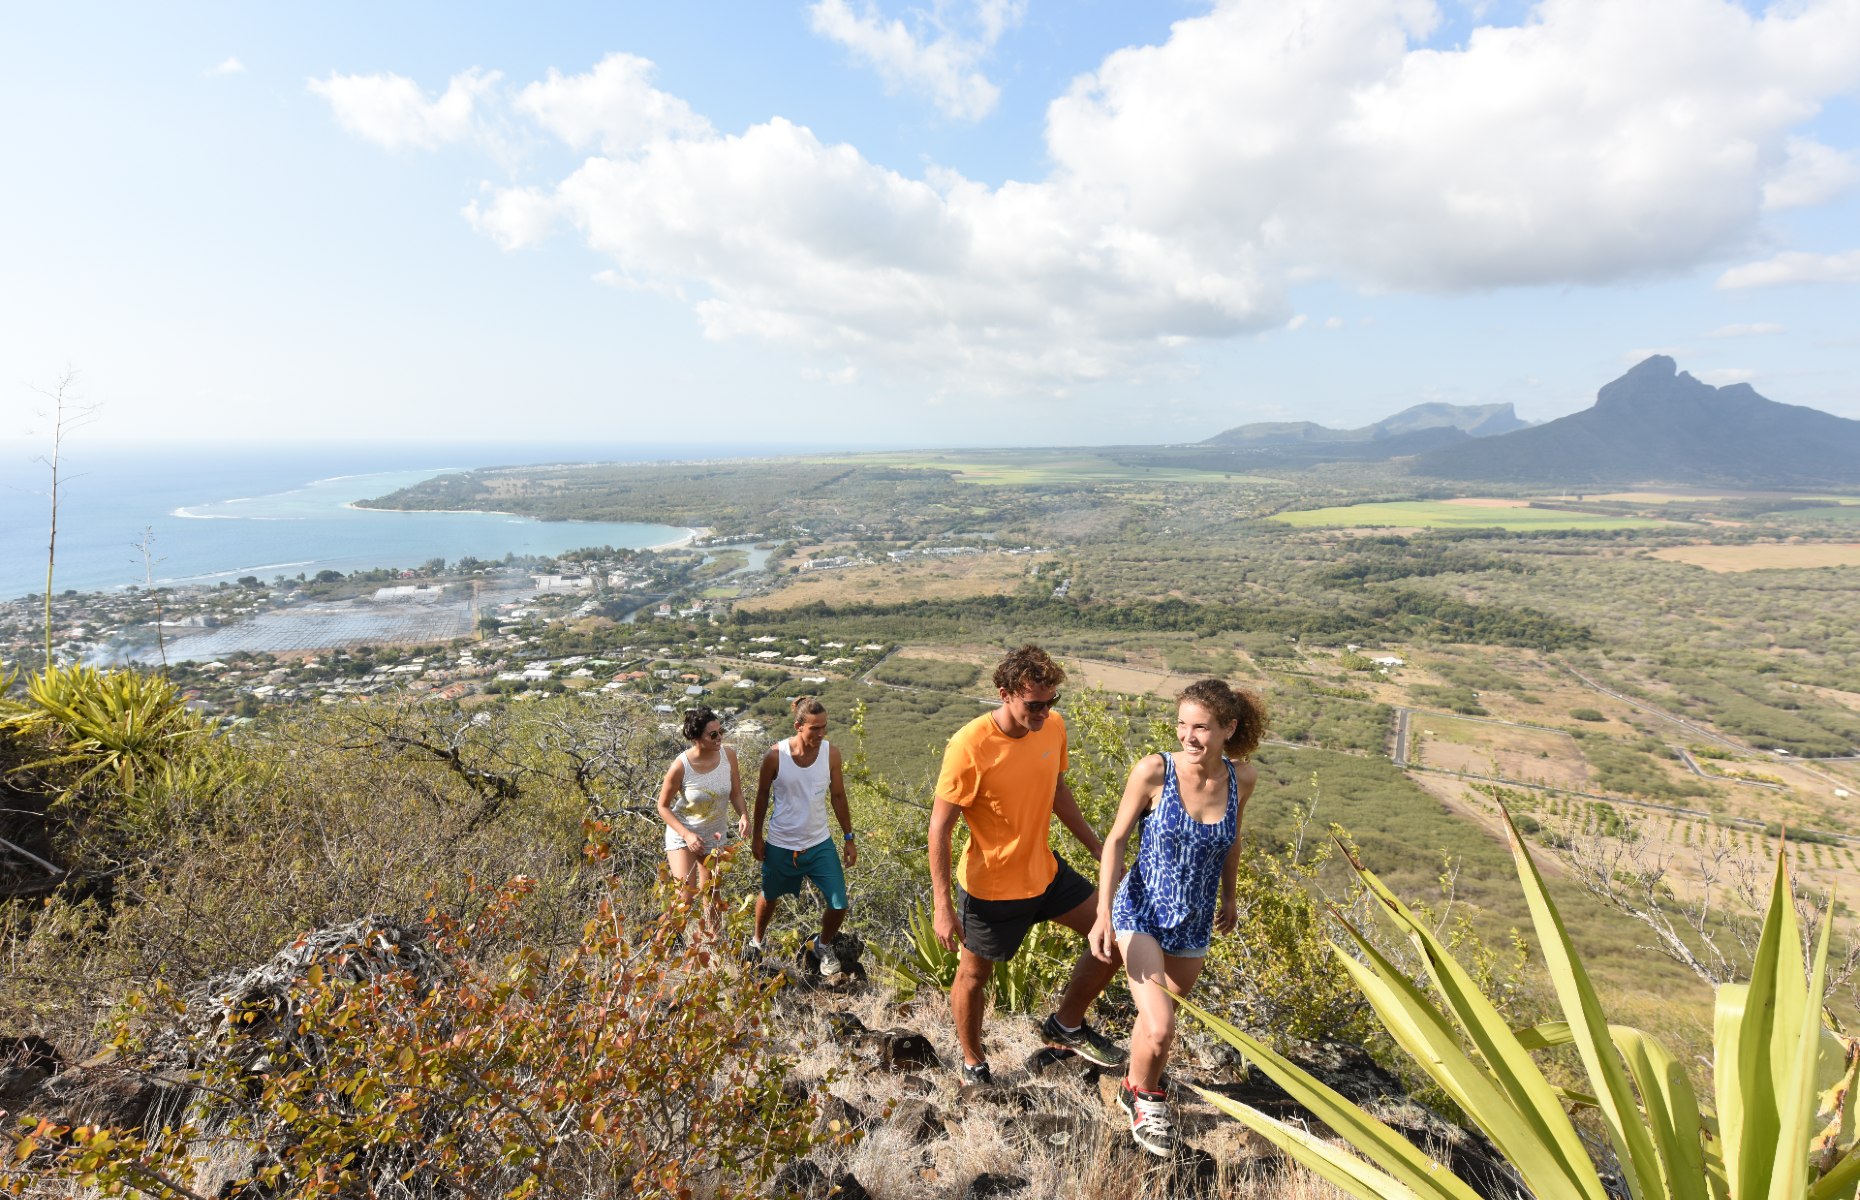 Hiking up a mountain in Mauritius. Photo: Veranda Resorts